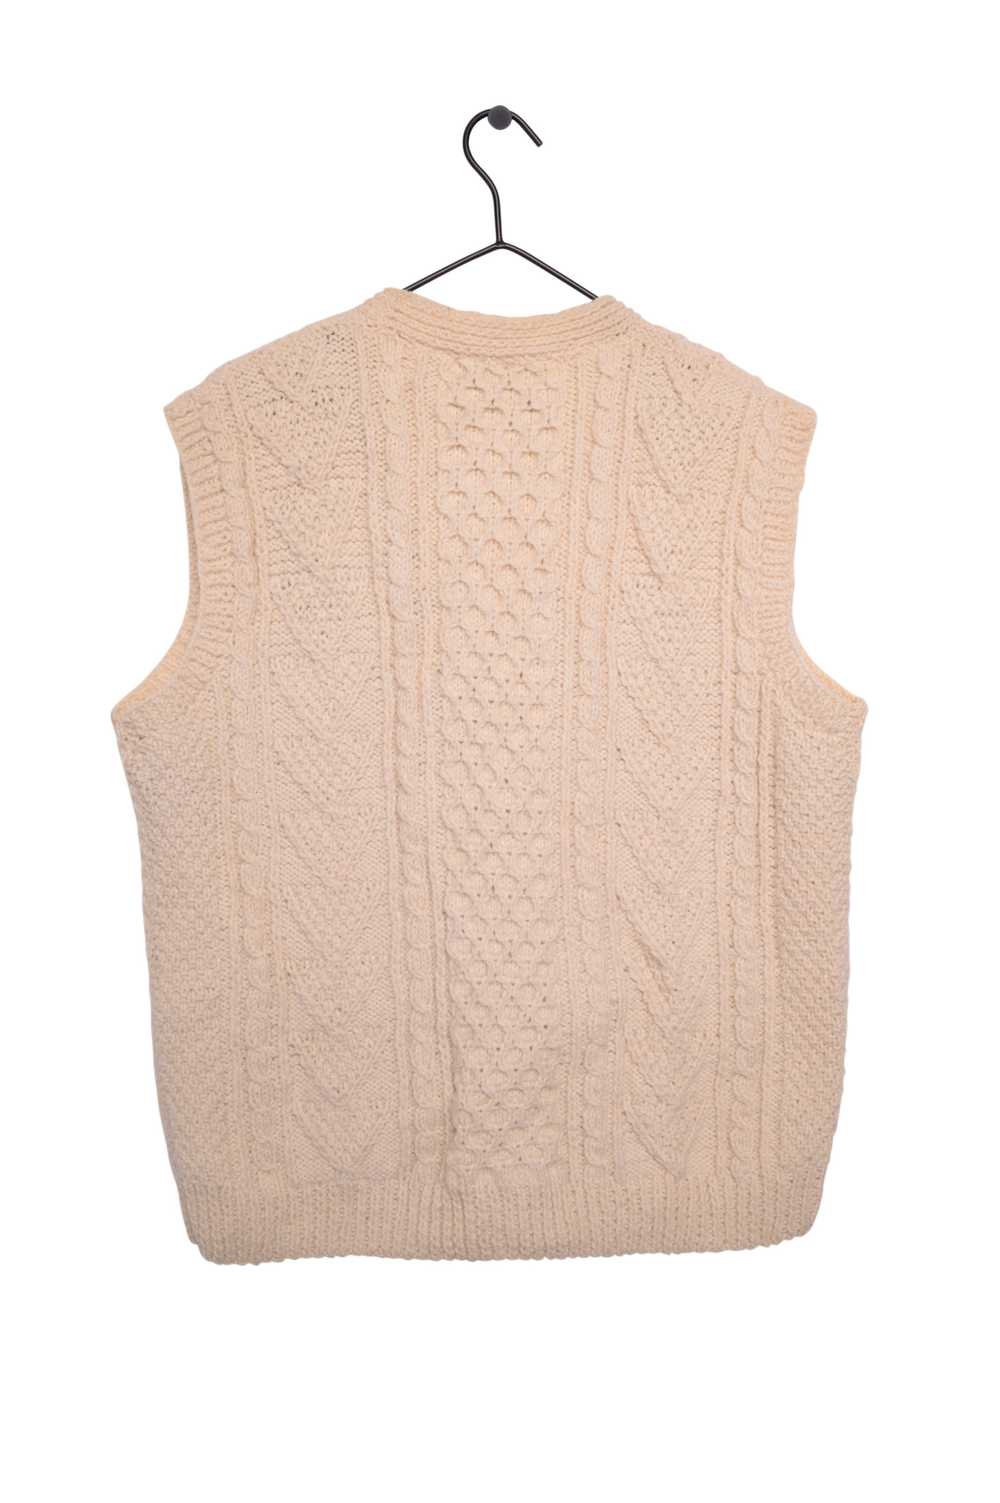 Irish Cable Knit Sweater Vest - image 3